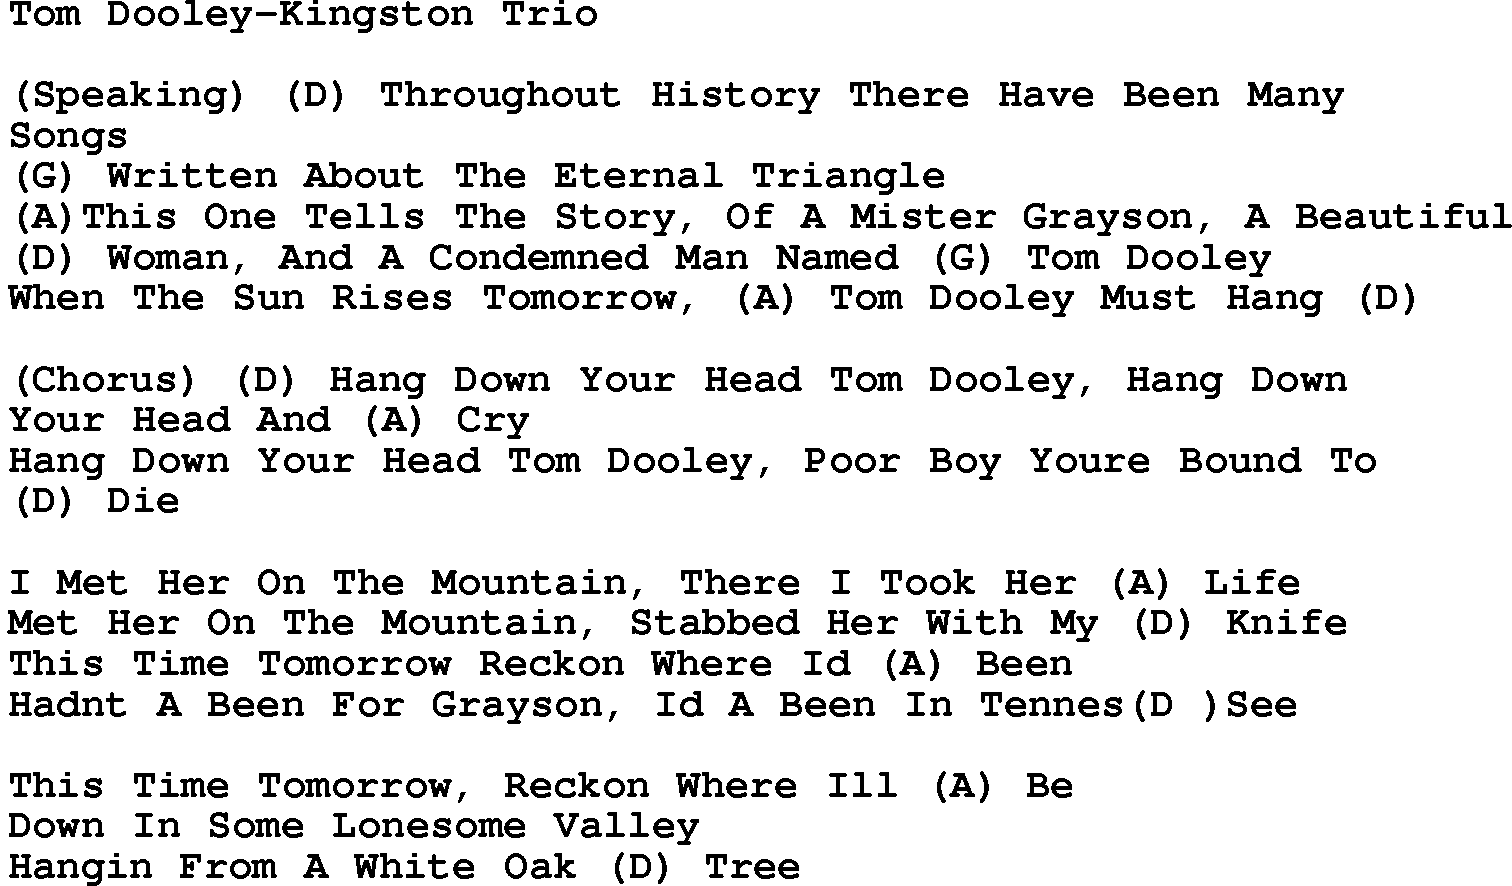 country-music-tom-dooley-kingston-trio-lyrics-and-chords